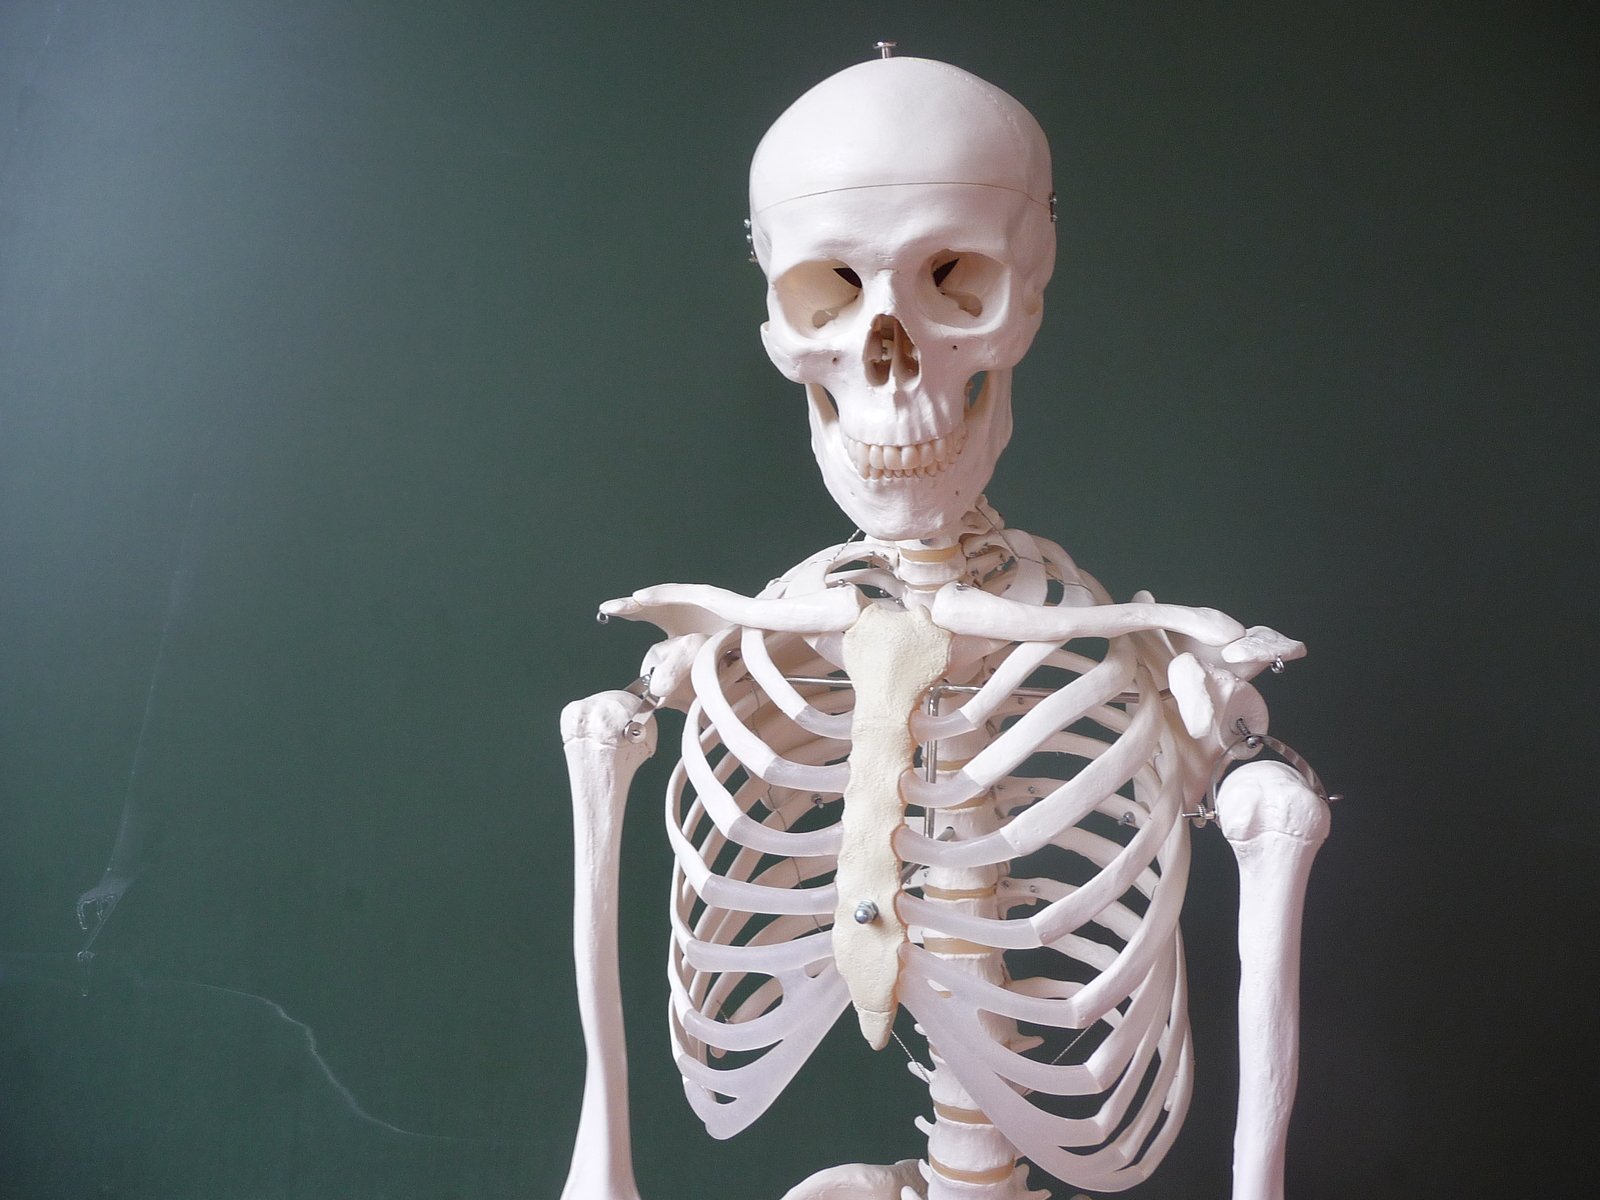 a skeletal skeleton sits in a pose against a black background